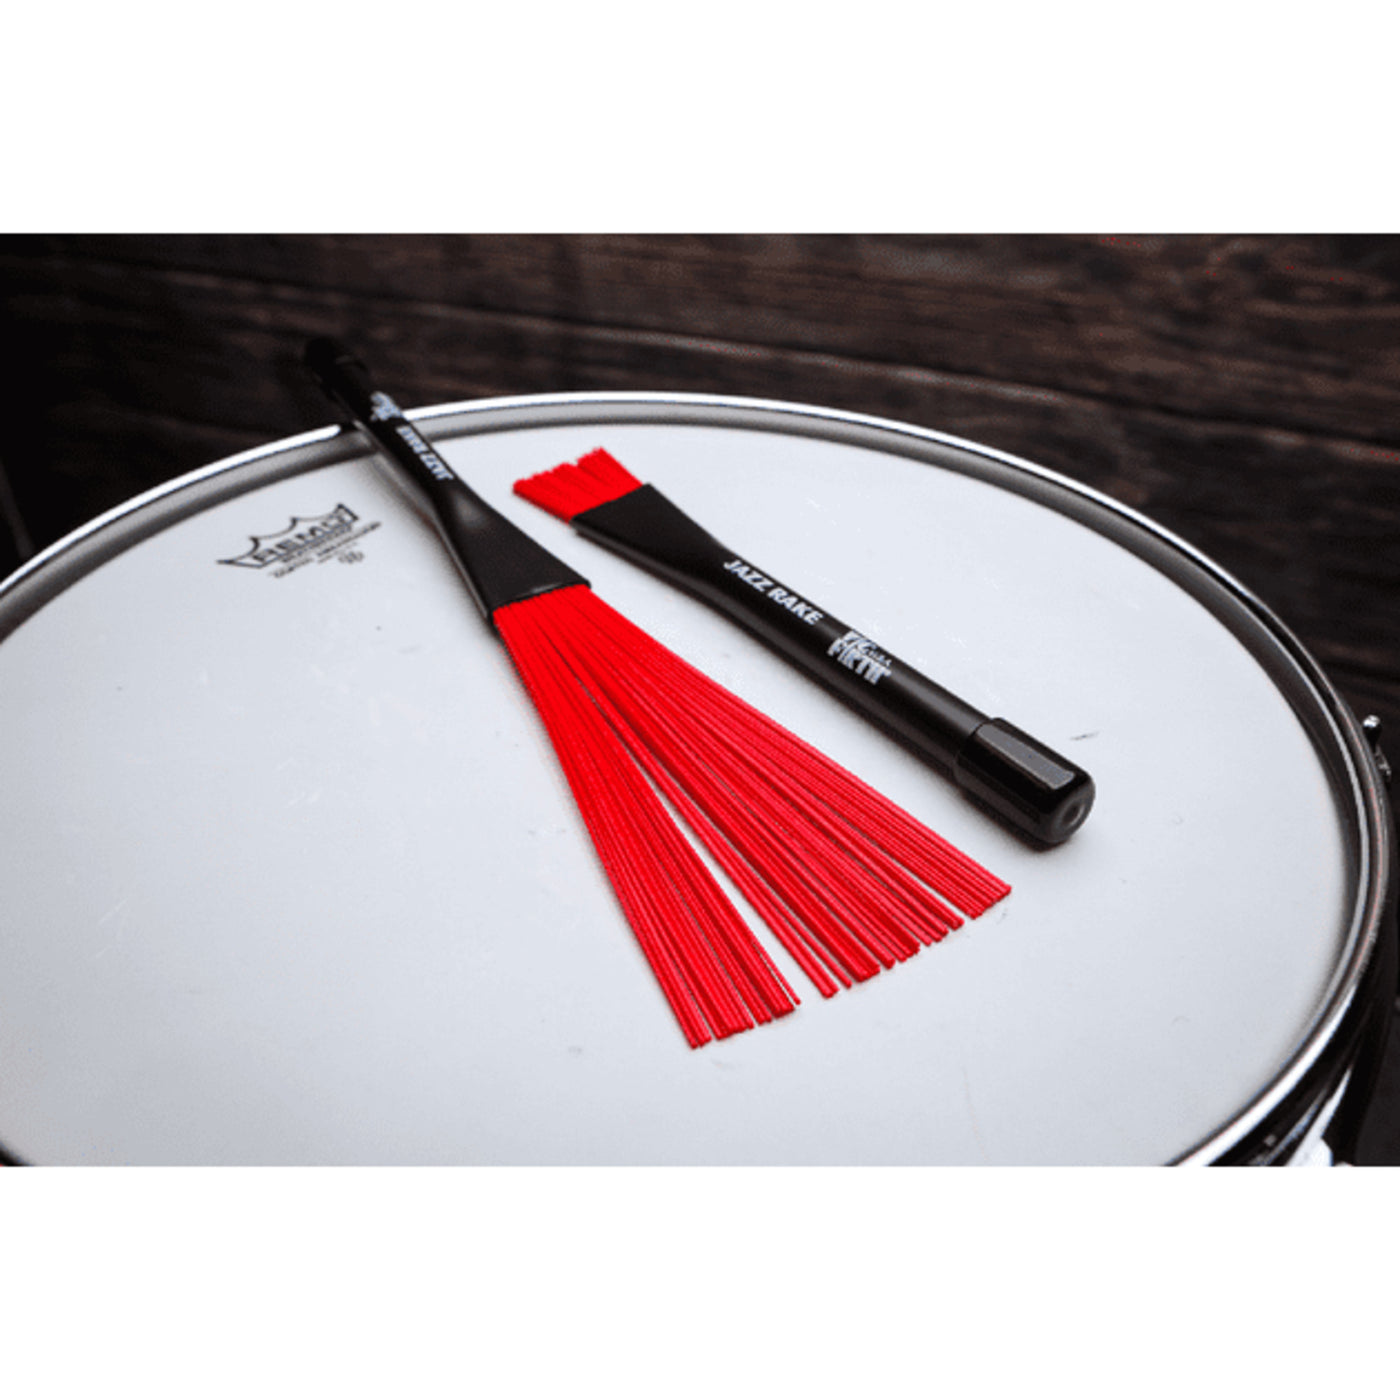 Vic Firth Jazz Rake – Red Plastic Brush (BJR)